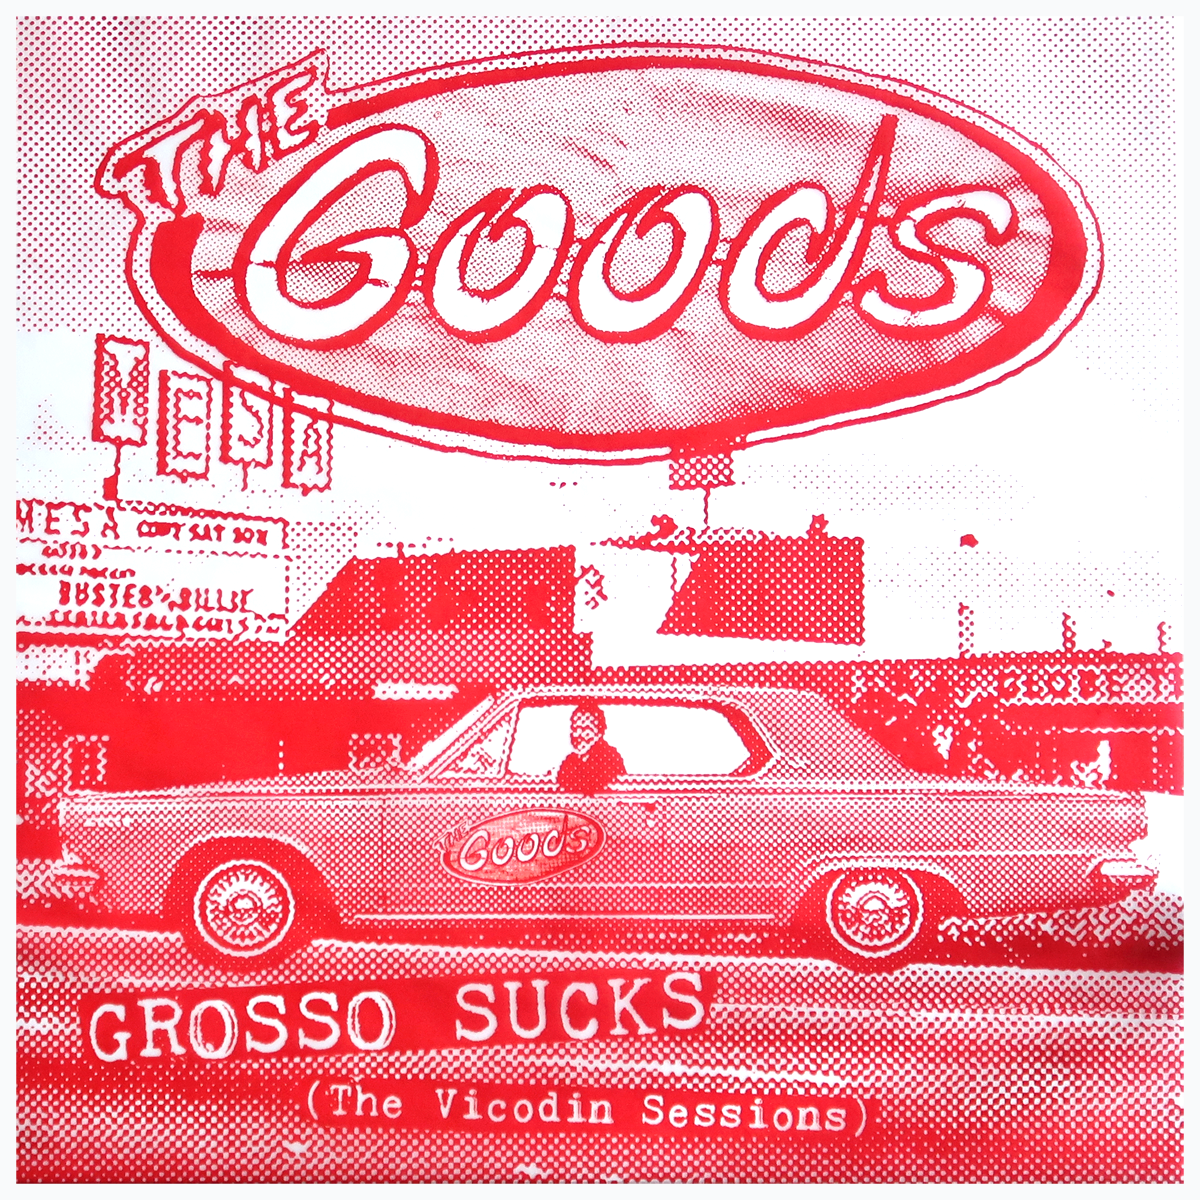 The Goods- Grosso Sucks (The Vicodin Sessions) LP ~EX STITCHES / US BOMBS : RARE ORANGE WAX W/ RARE RED + WHITE COVER LTD TO 50!